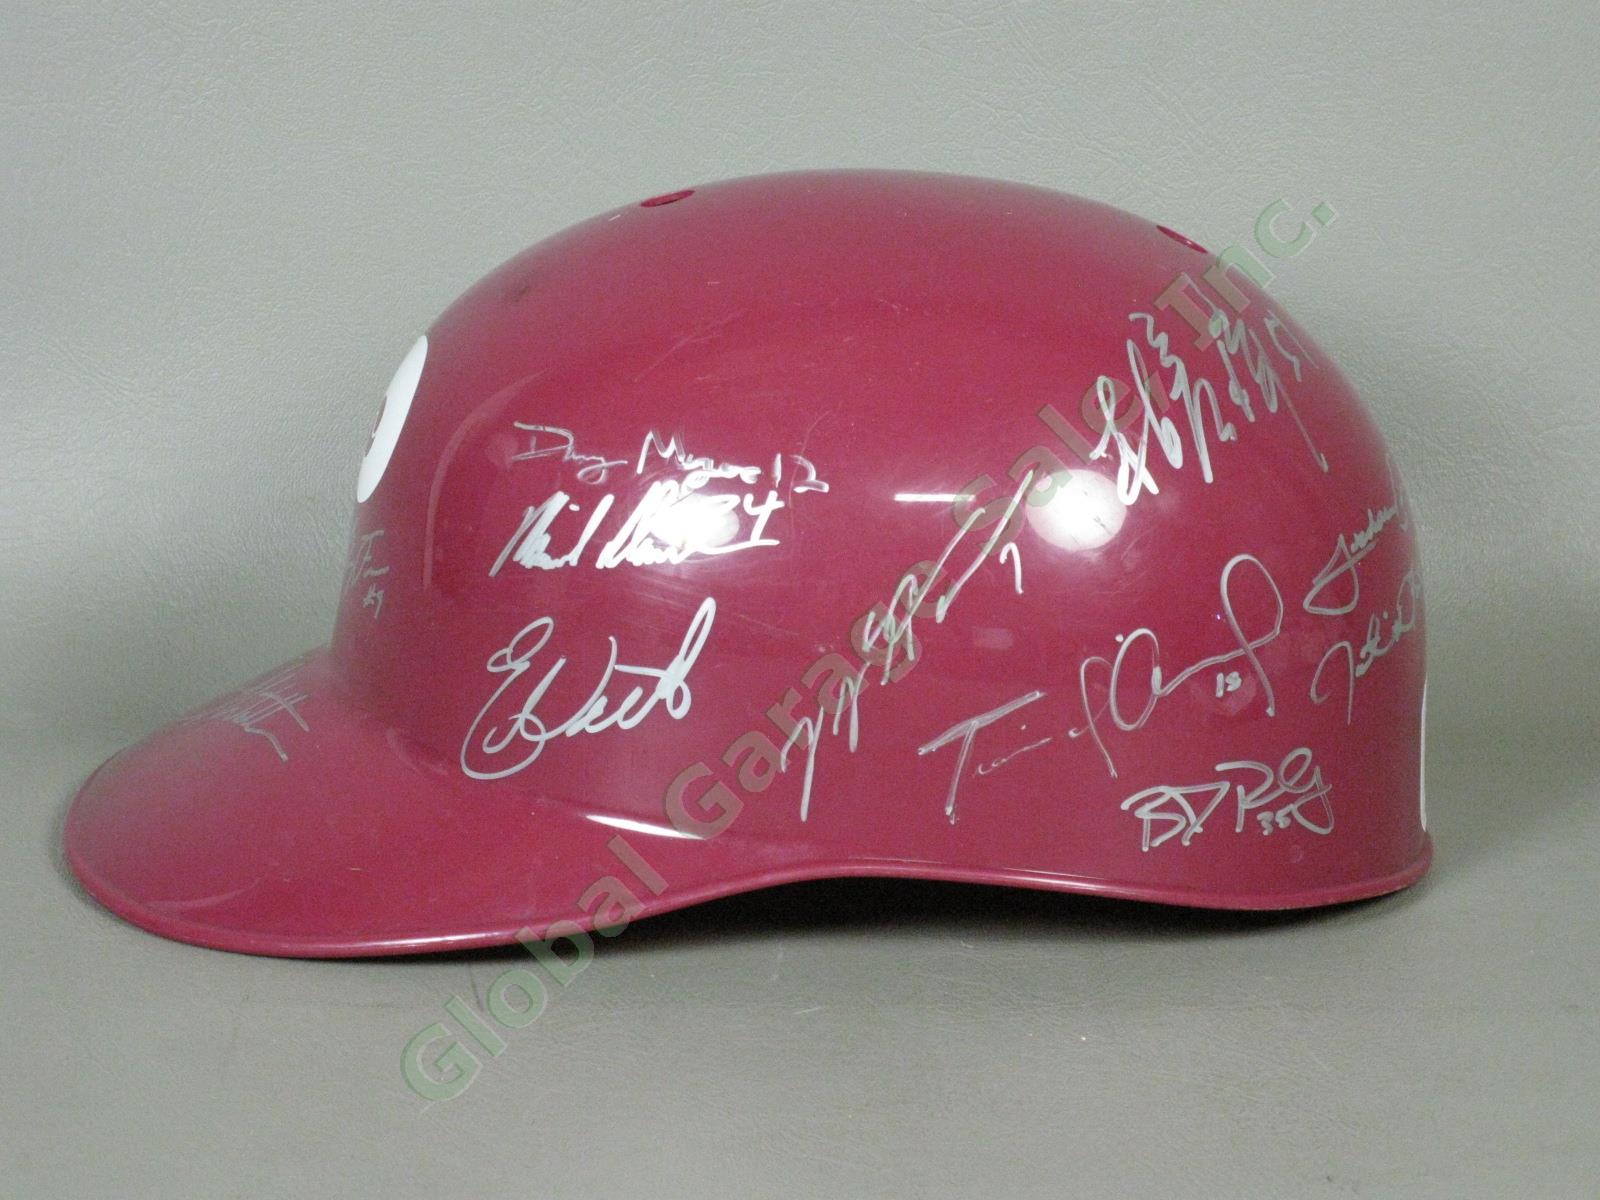 2008 Williamsport Crosscutters Team Signed Baseball Helmet Philadelphia Phillies 3